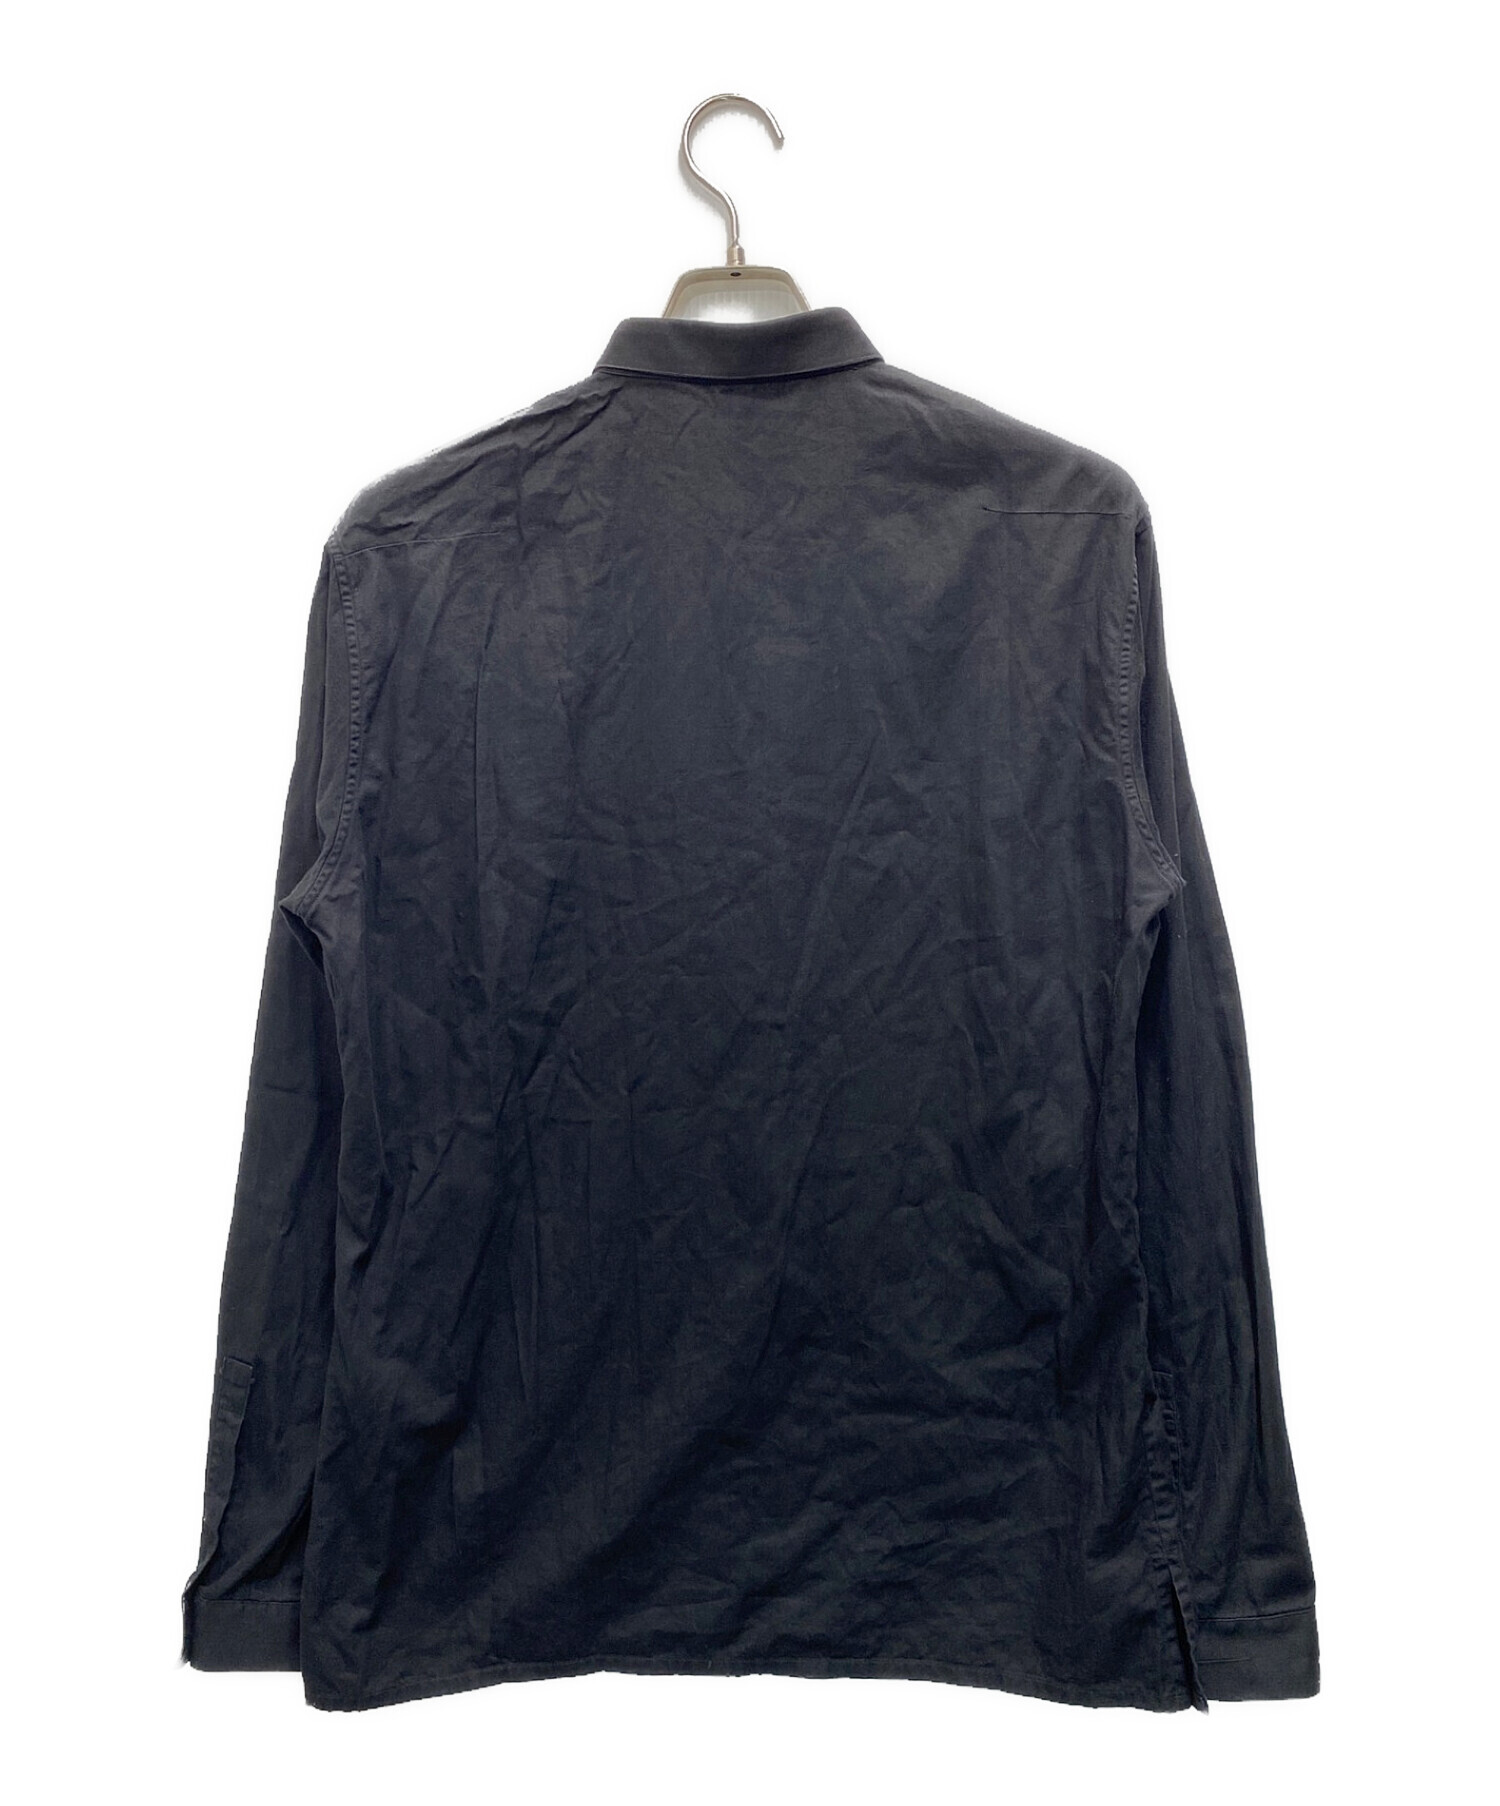 DIOR HOMME (ディオール オム) ロングスリーブシャツ ブラック サイズ:40